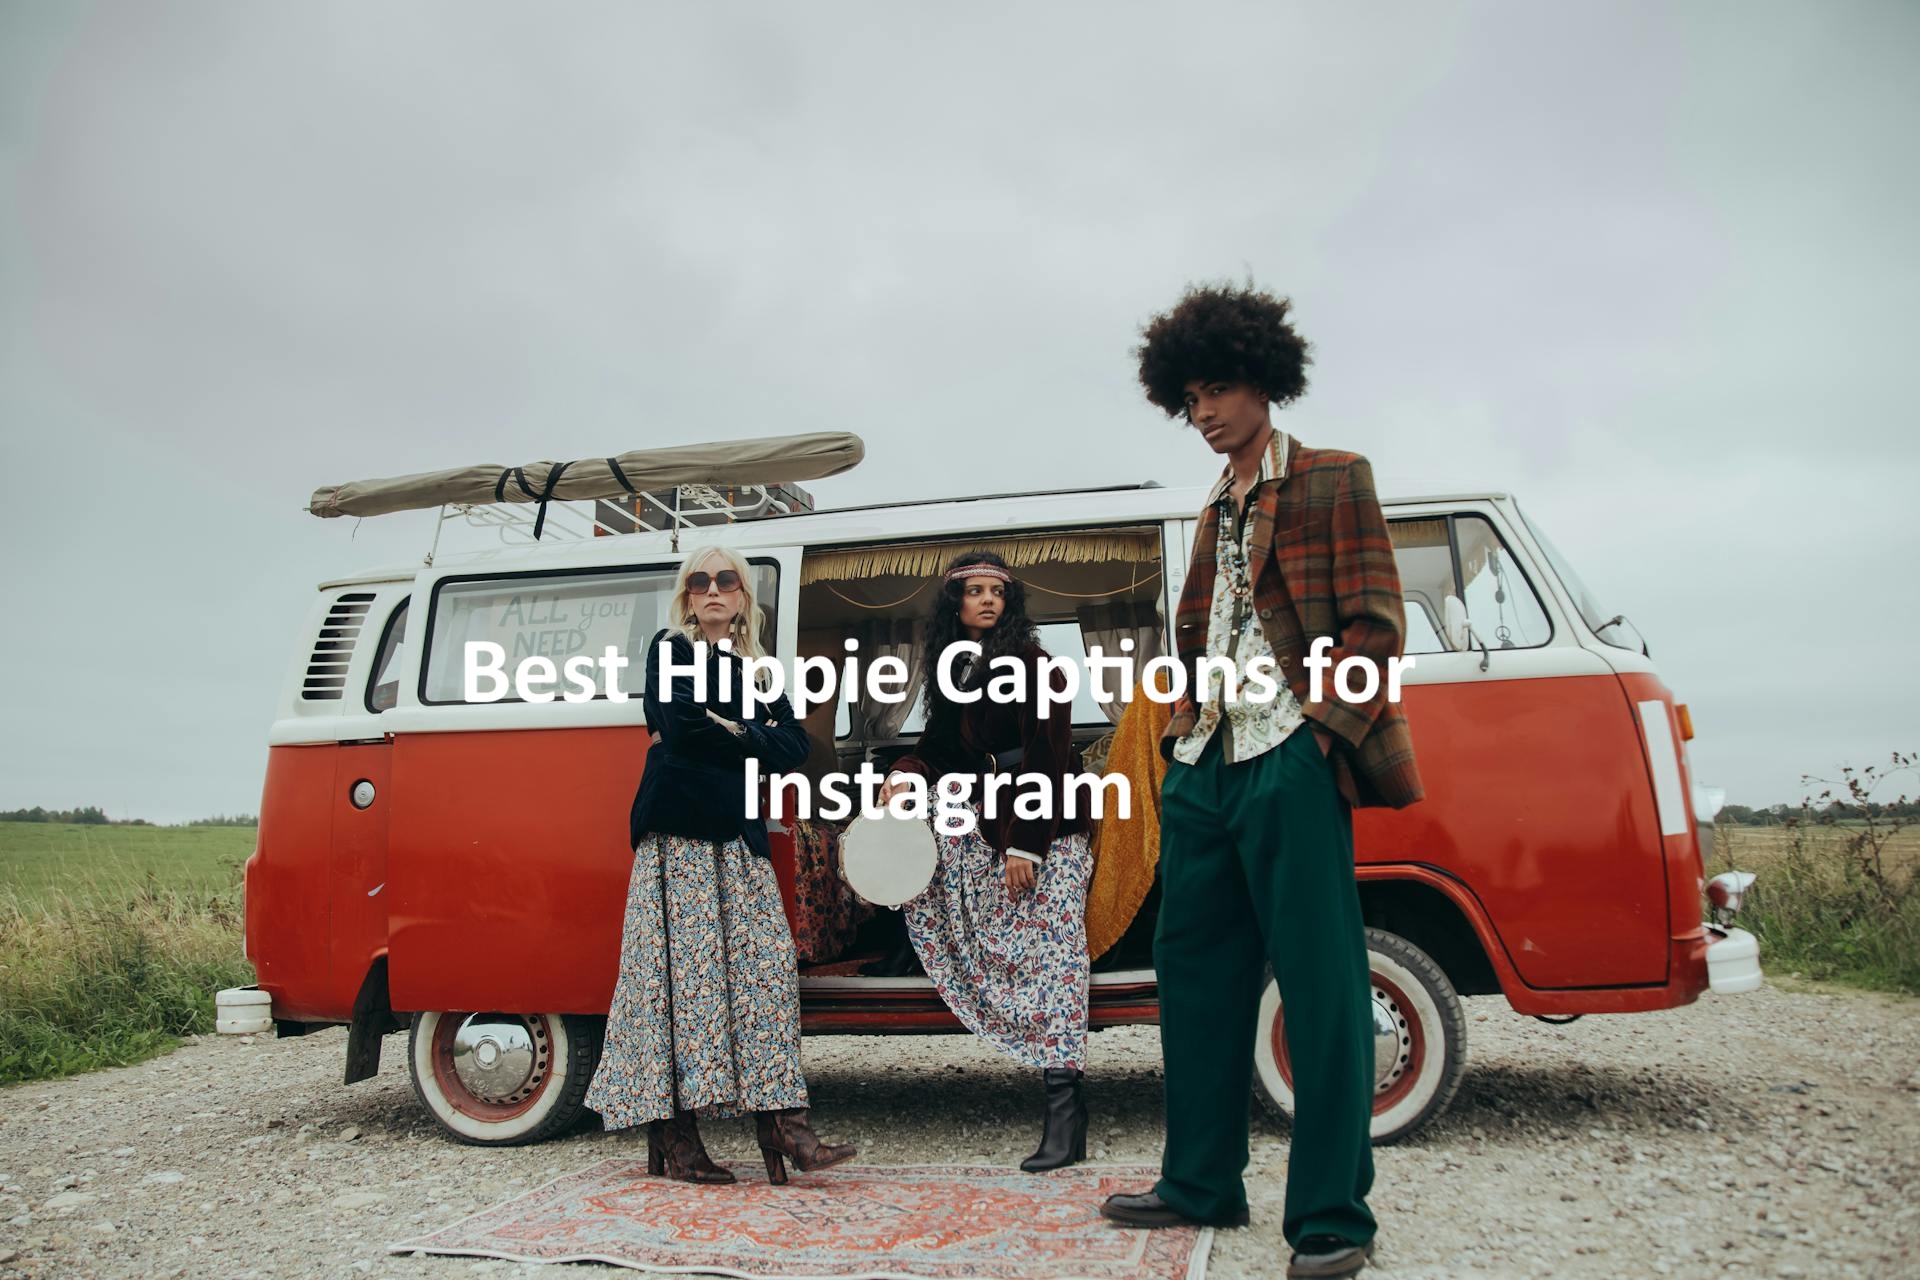 Hippie Captions for Instagram